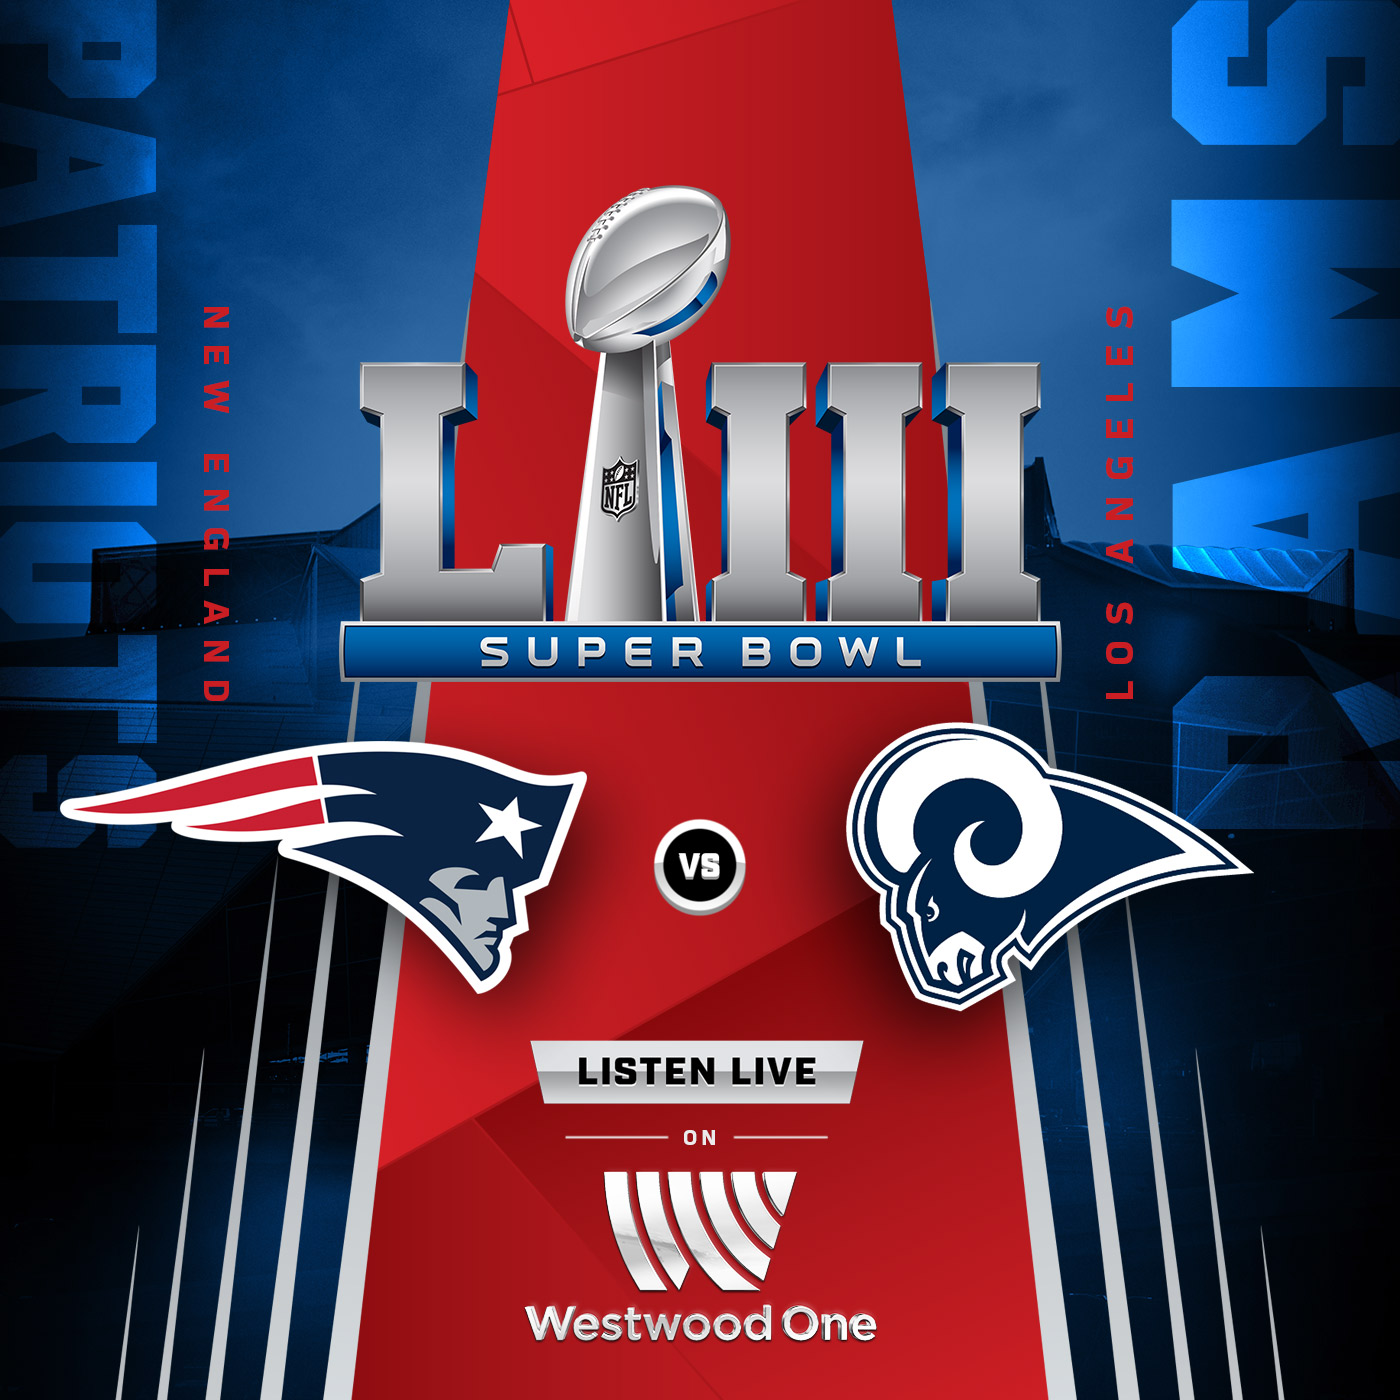 Final call - The New England Patriots win Super Bowl